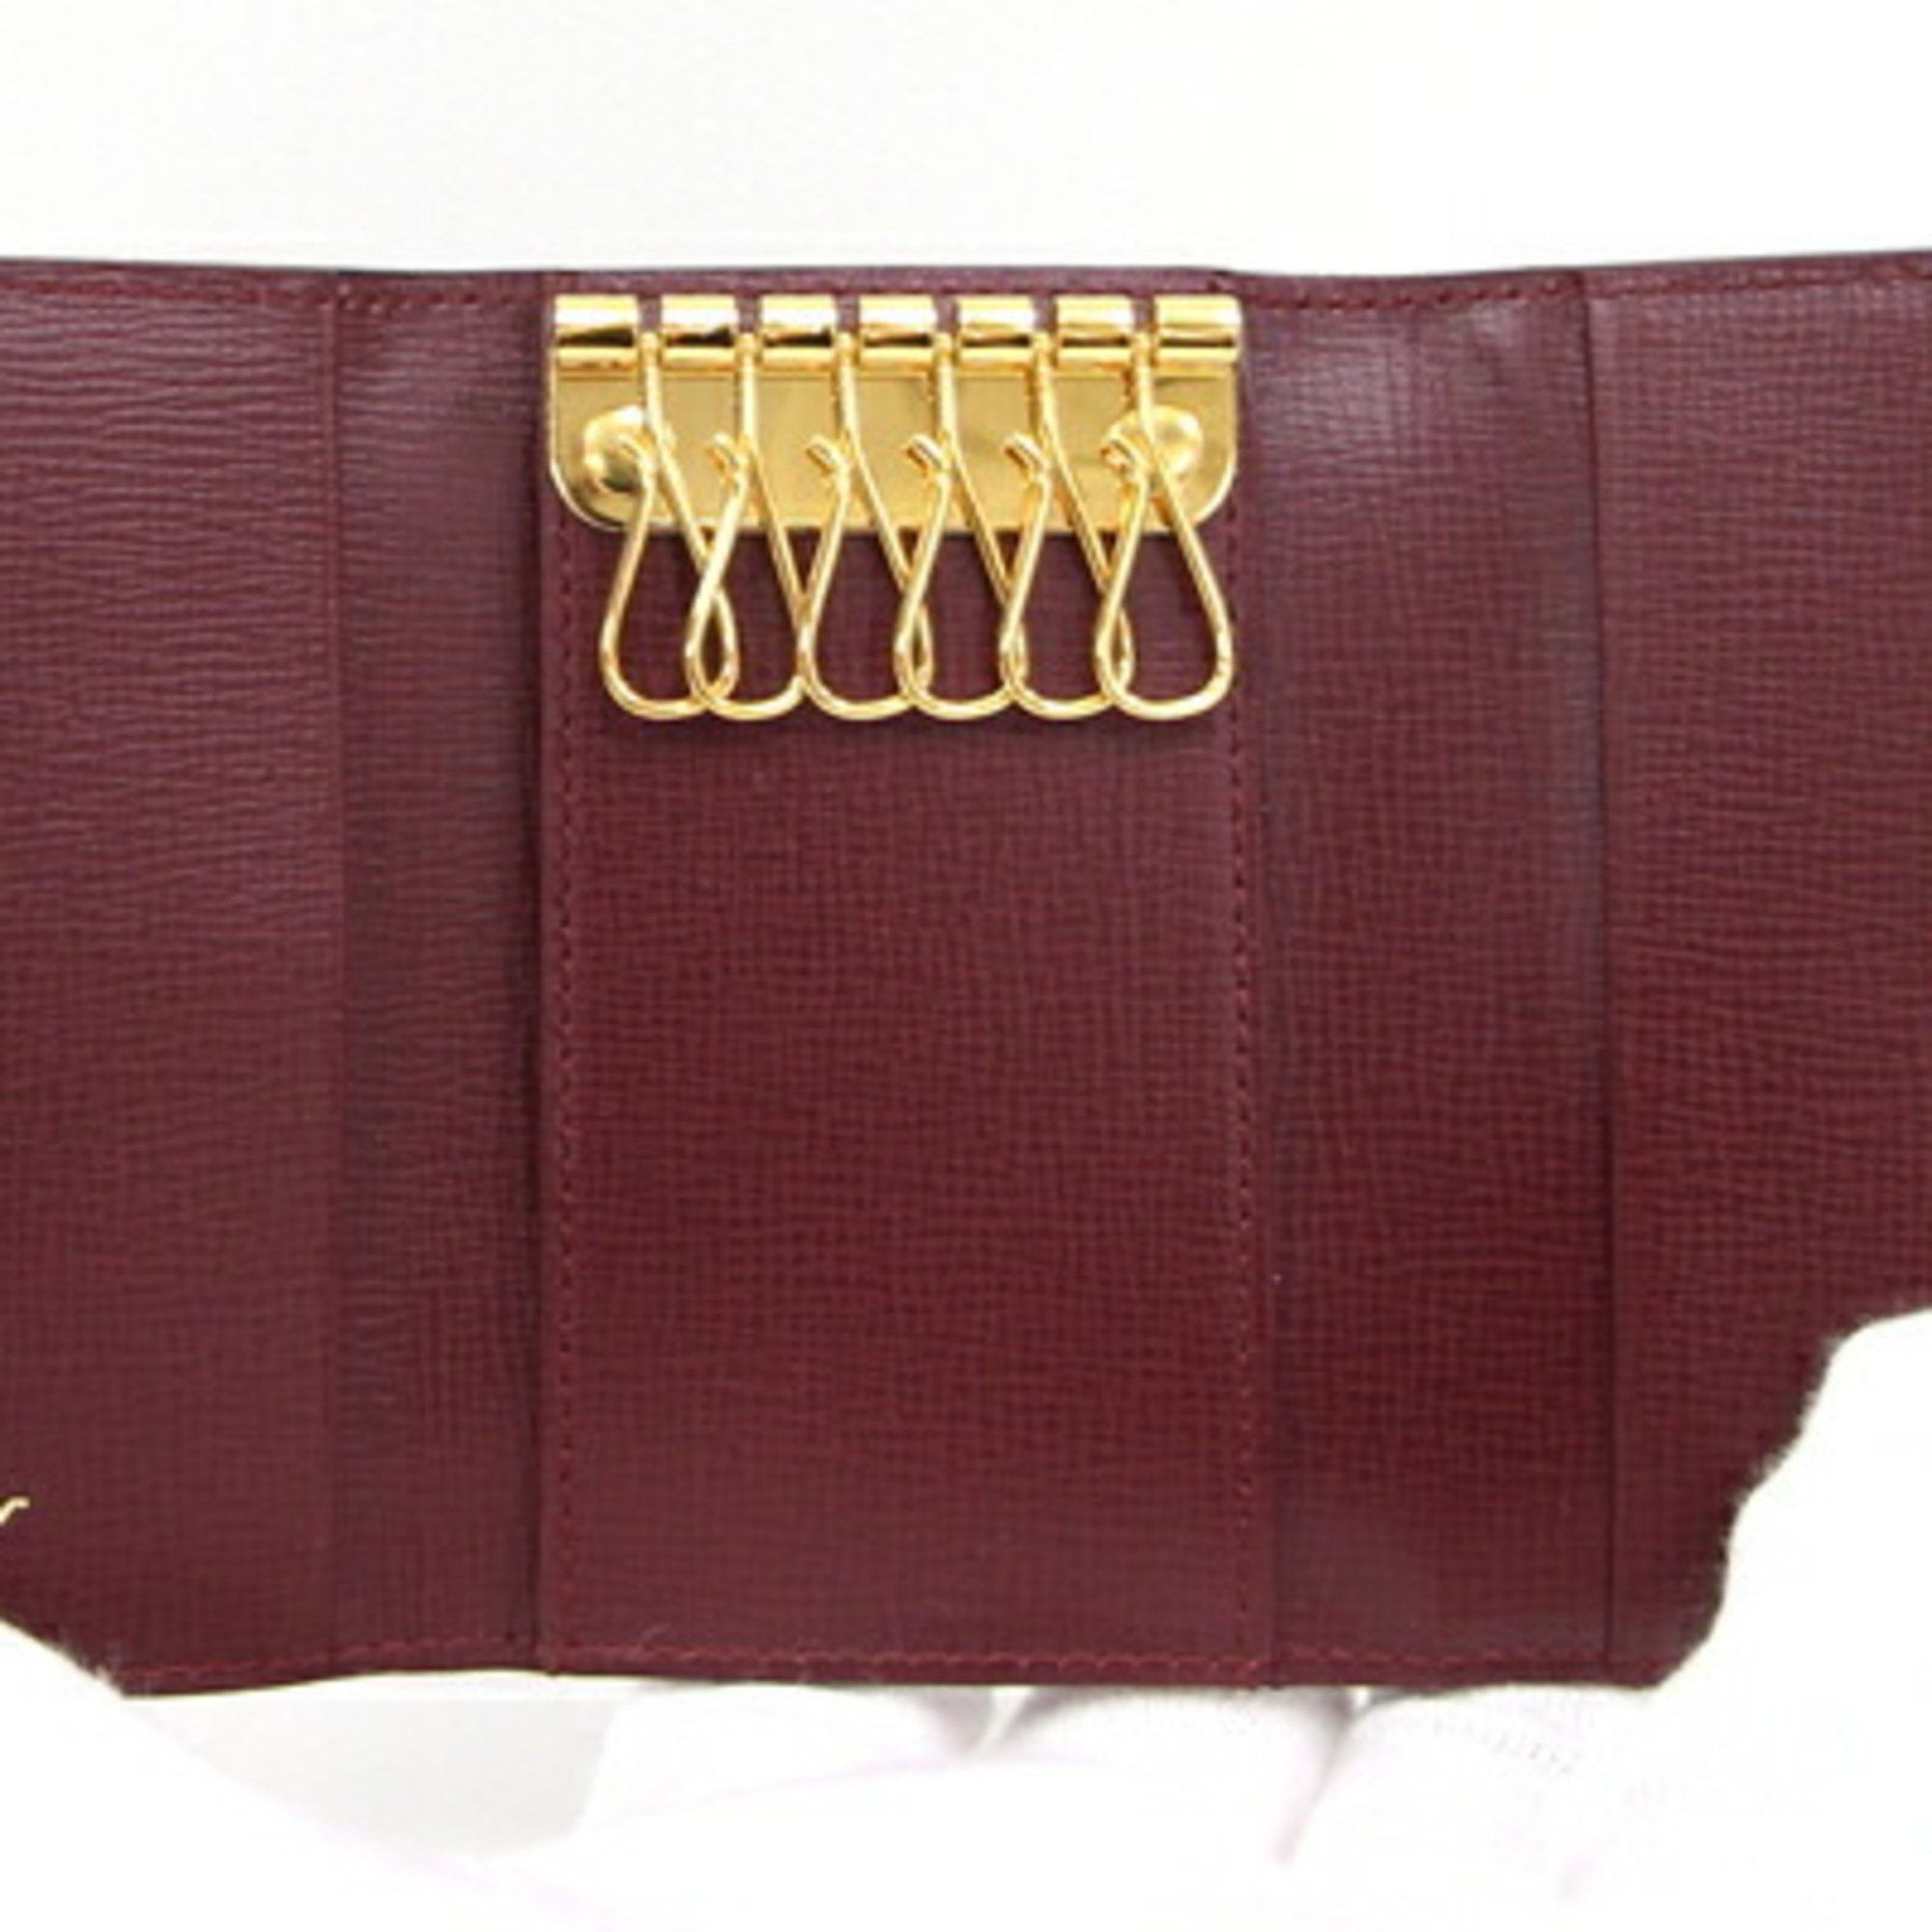 Cartier 6-ring key case Mast L3000156 Bordeaux leather wine red holder lock ladies men